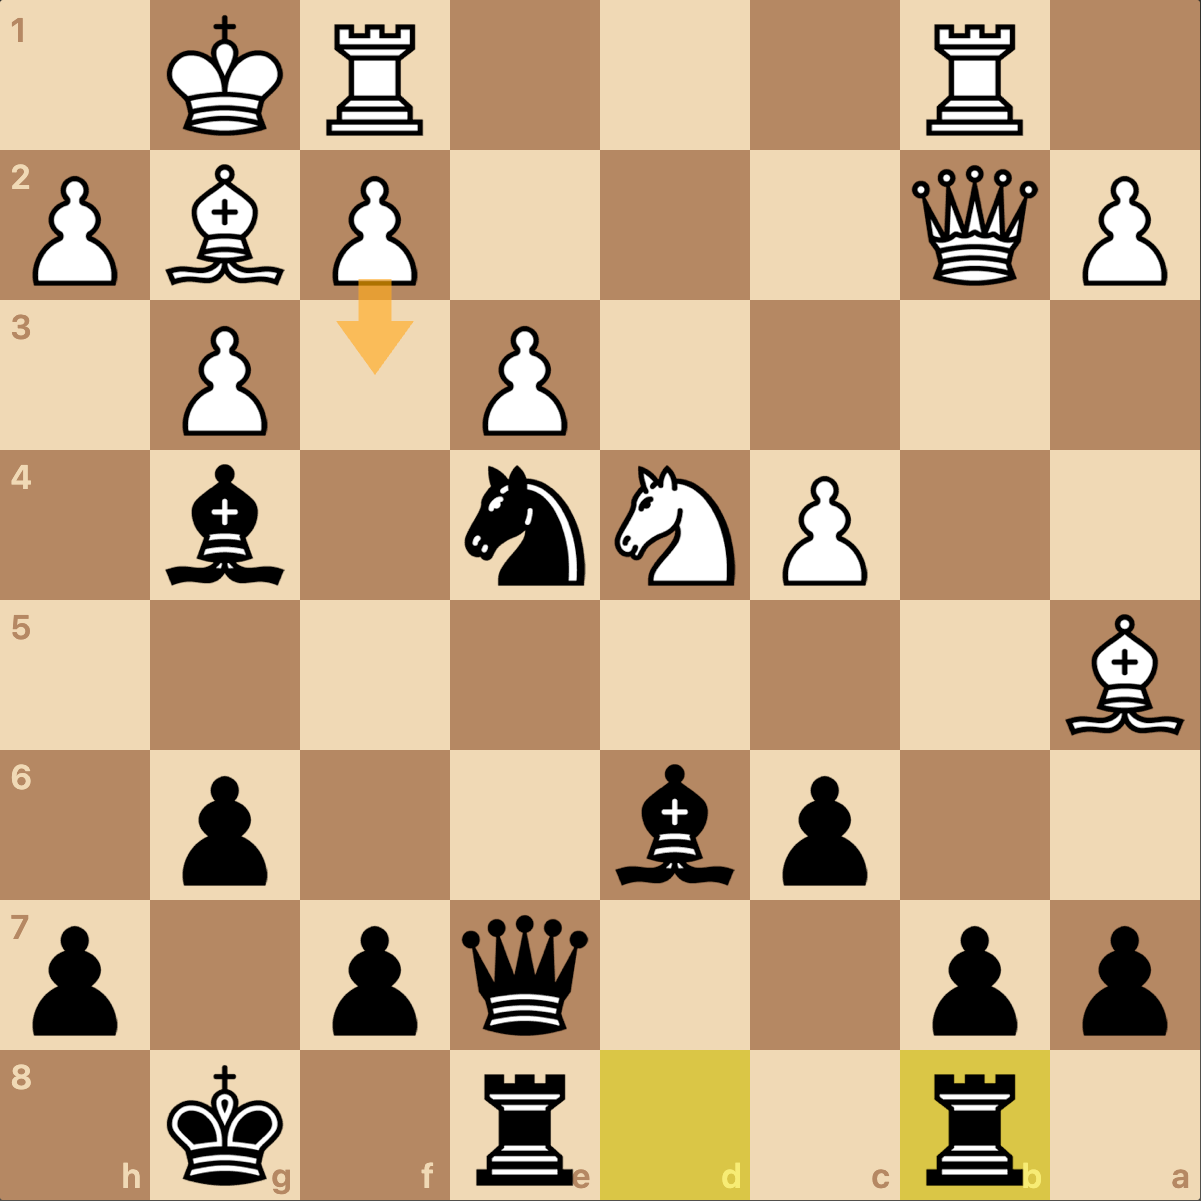 Can Hikaru Out-blitz Vladimir Kramnik? 